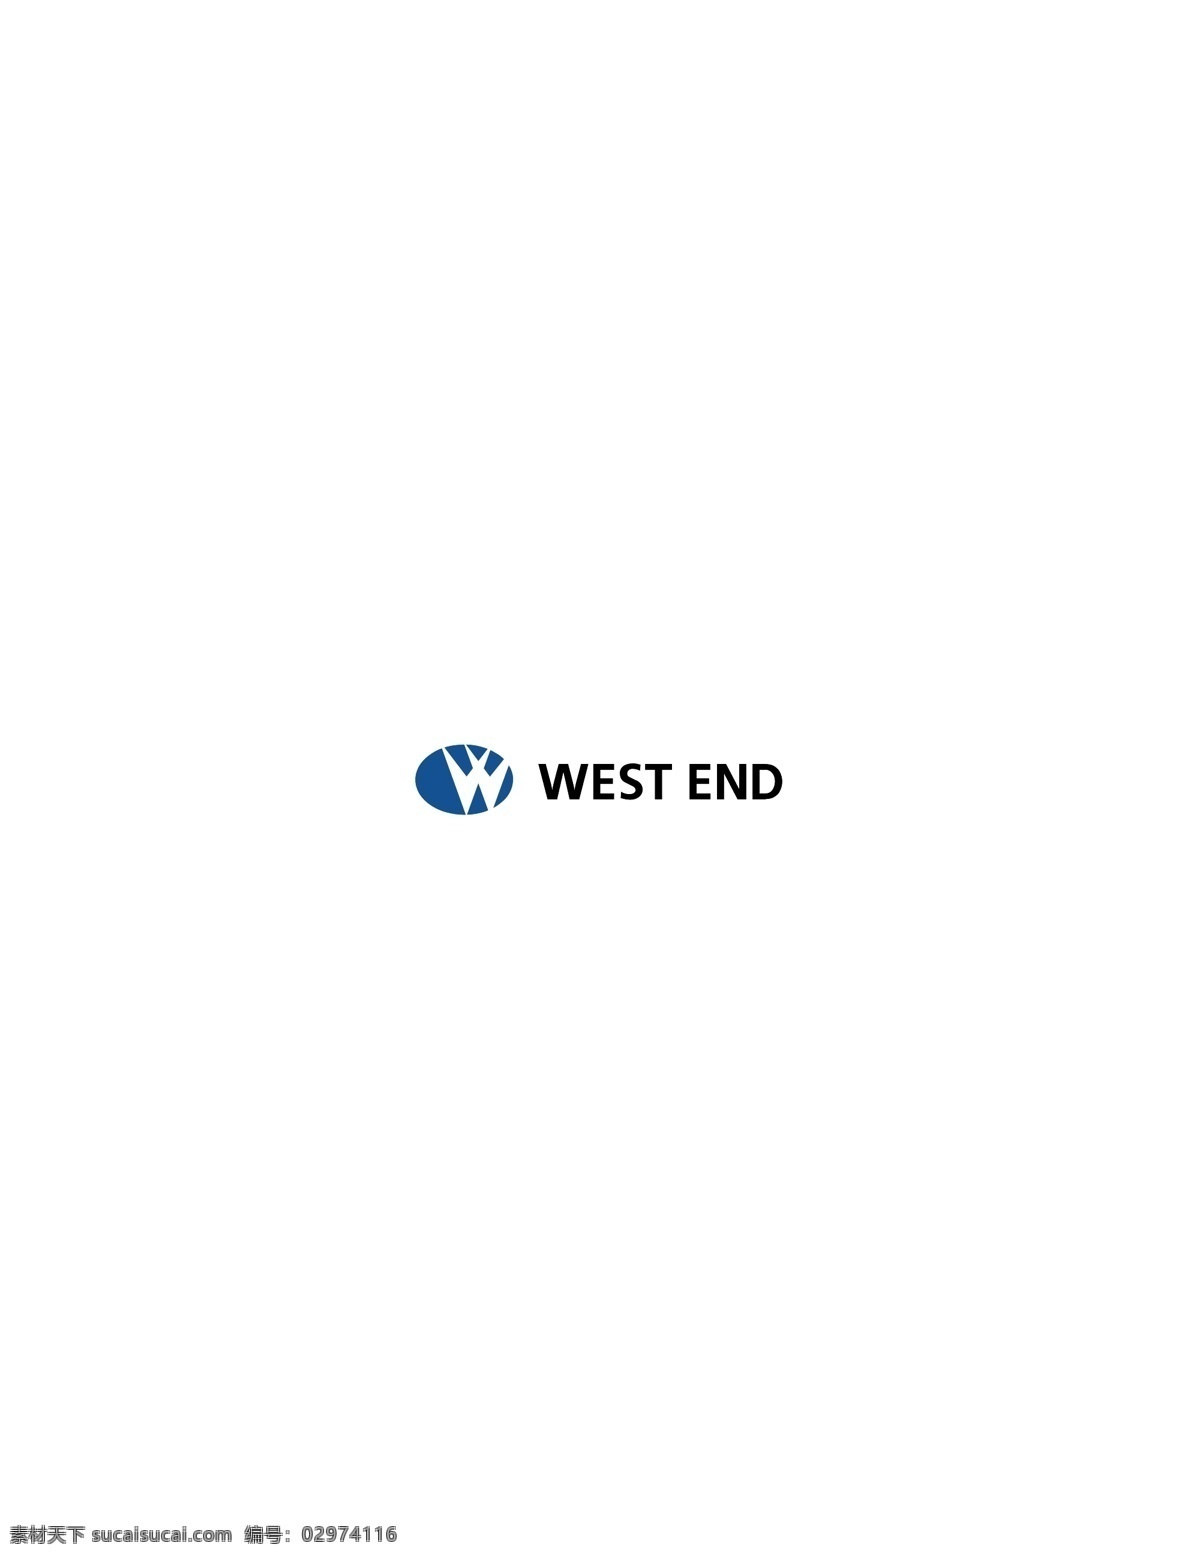 logo大全 logo 设计欣赏 商业矢量 矢量下载 west end 国外 知名 公司 标志 范例 标志设计 欣赏 网页矢量 矢量图 其他矢量图